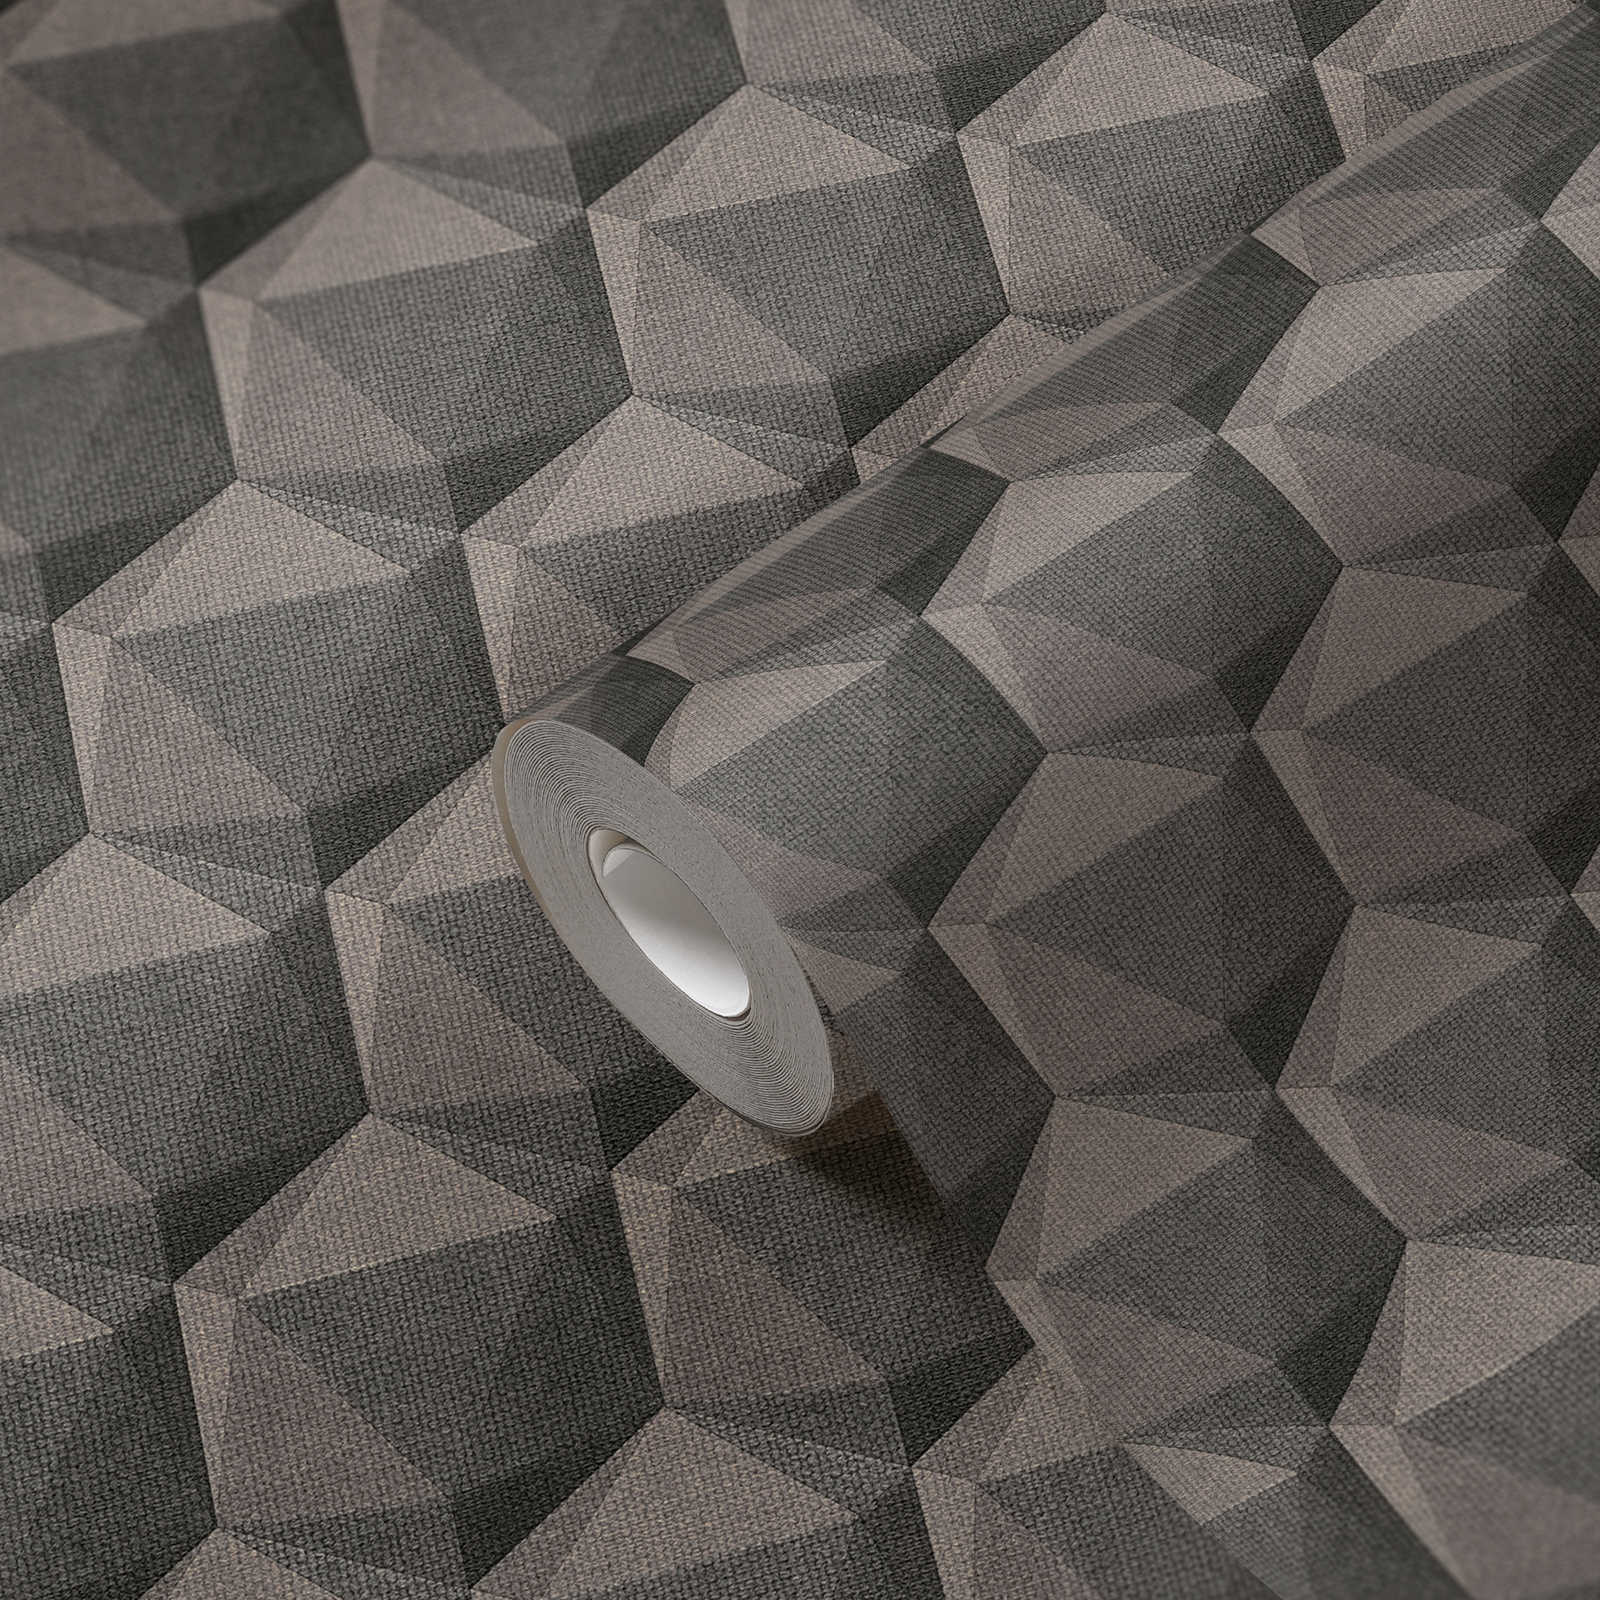             Papel pintado gráfico de óptica 3D con patrón poligonal - gris, beige, negro
        